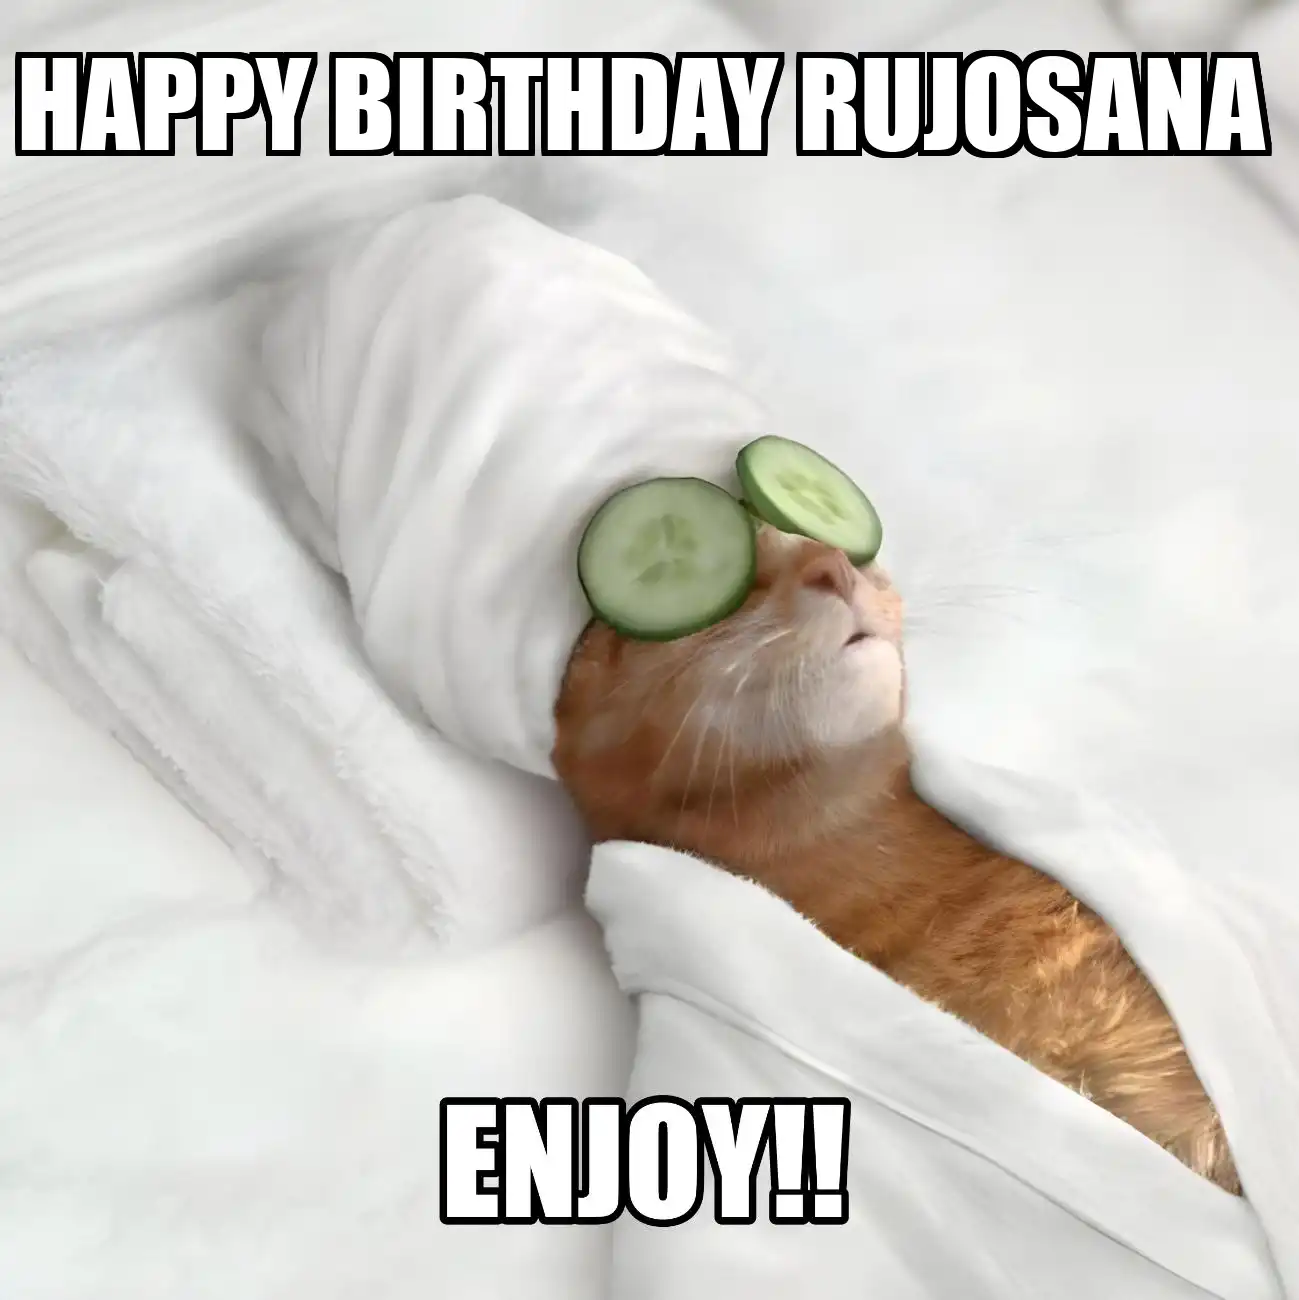 Happy Birthday Rujosana Enjoy Cat Meme